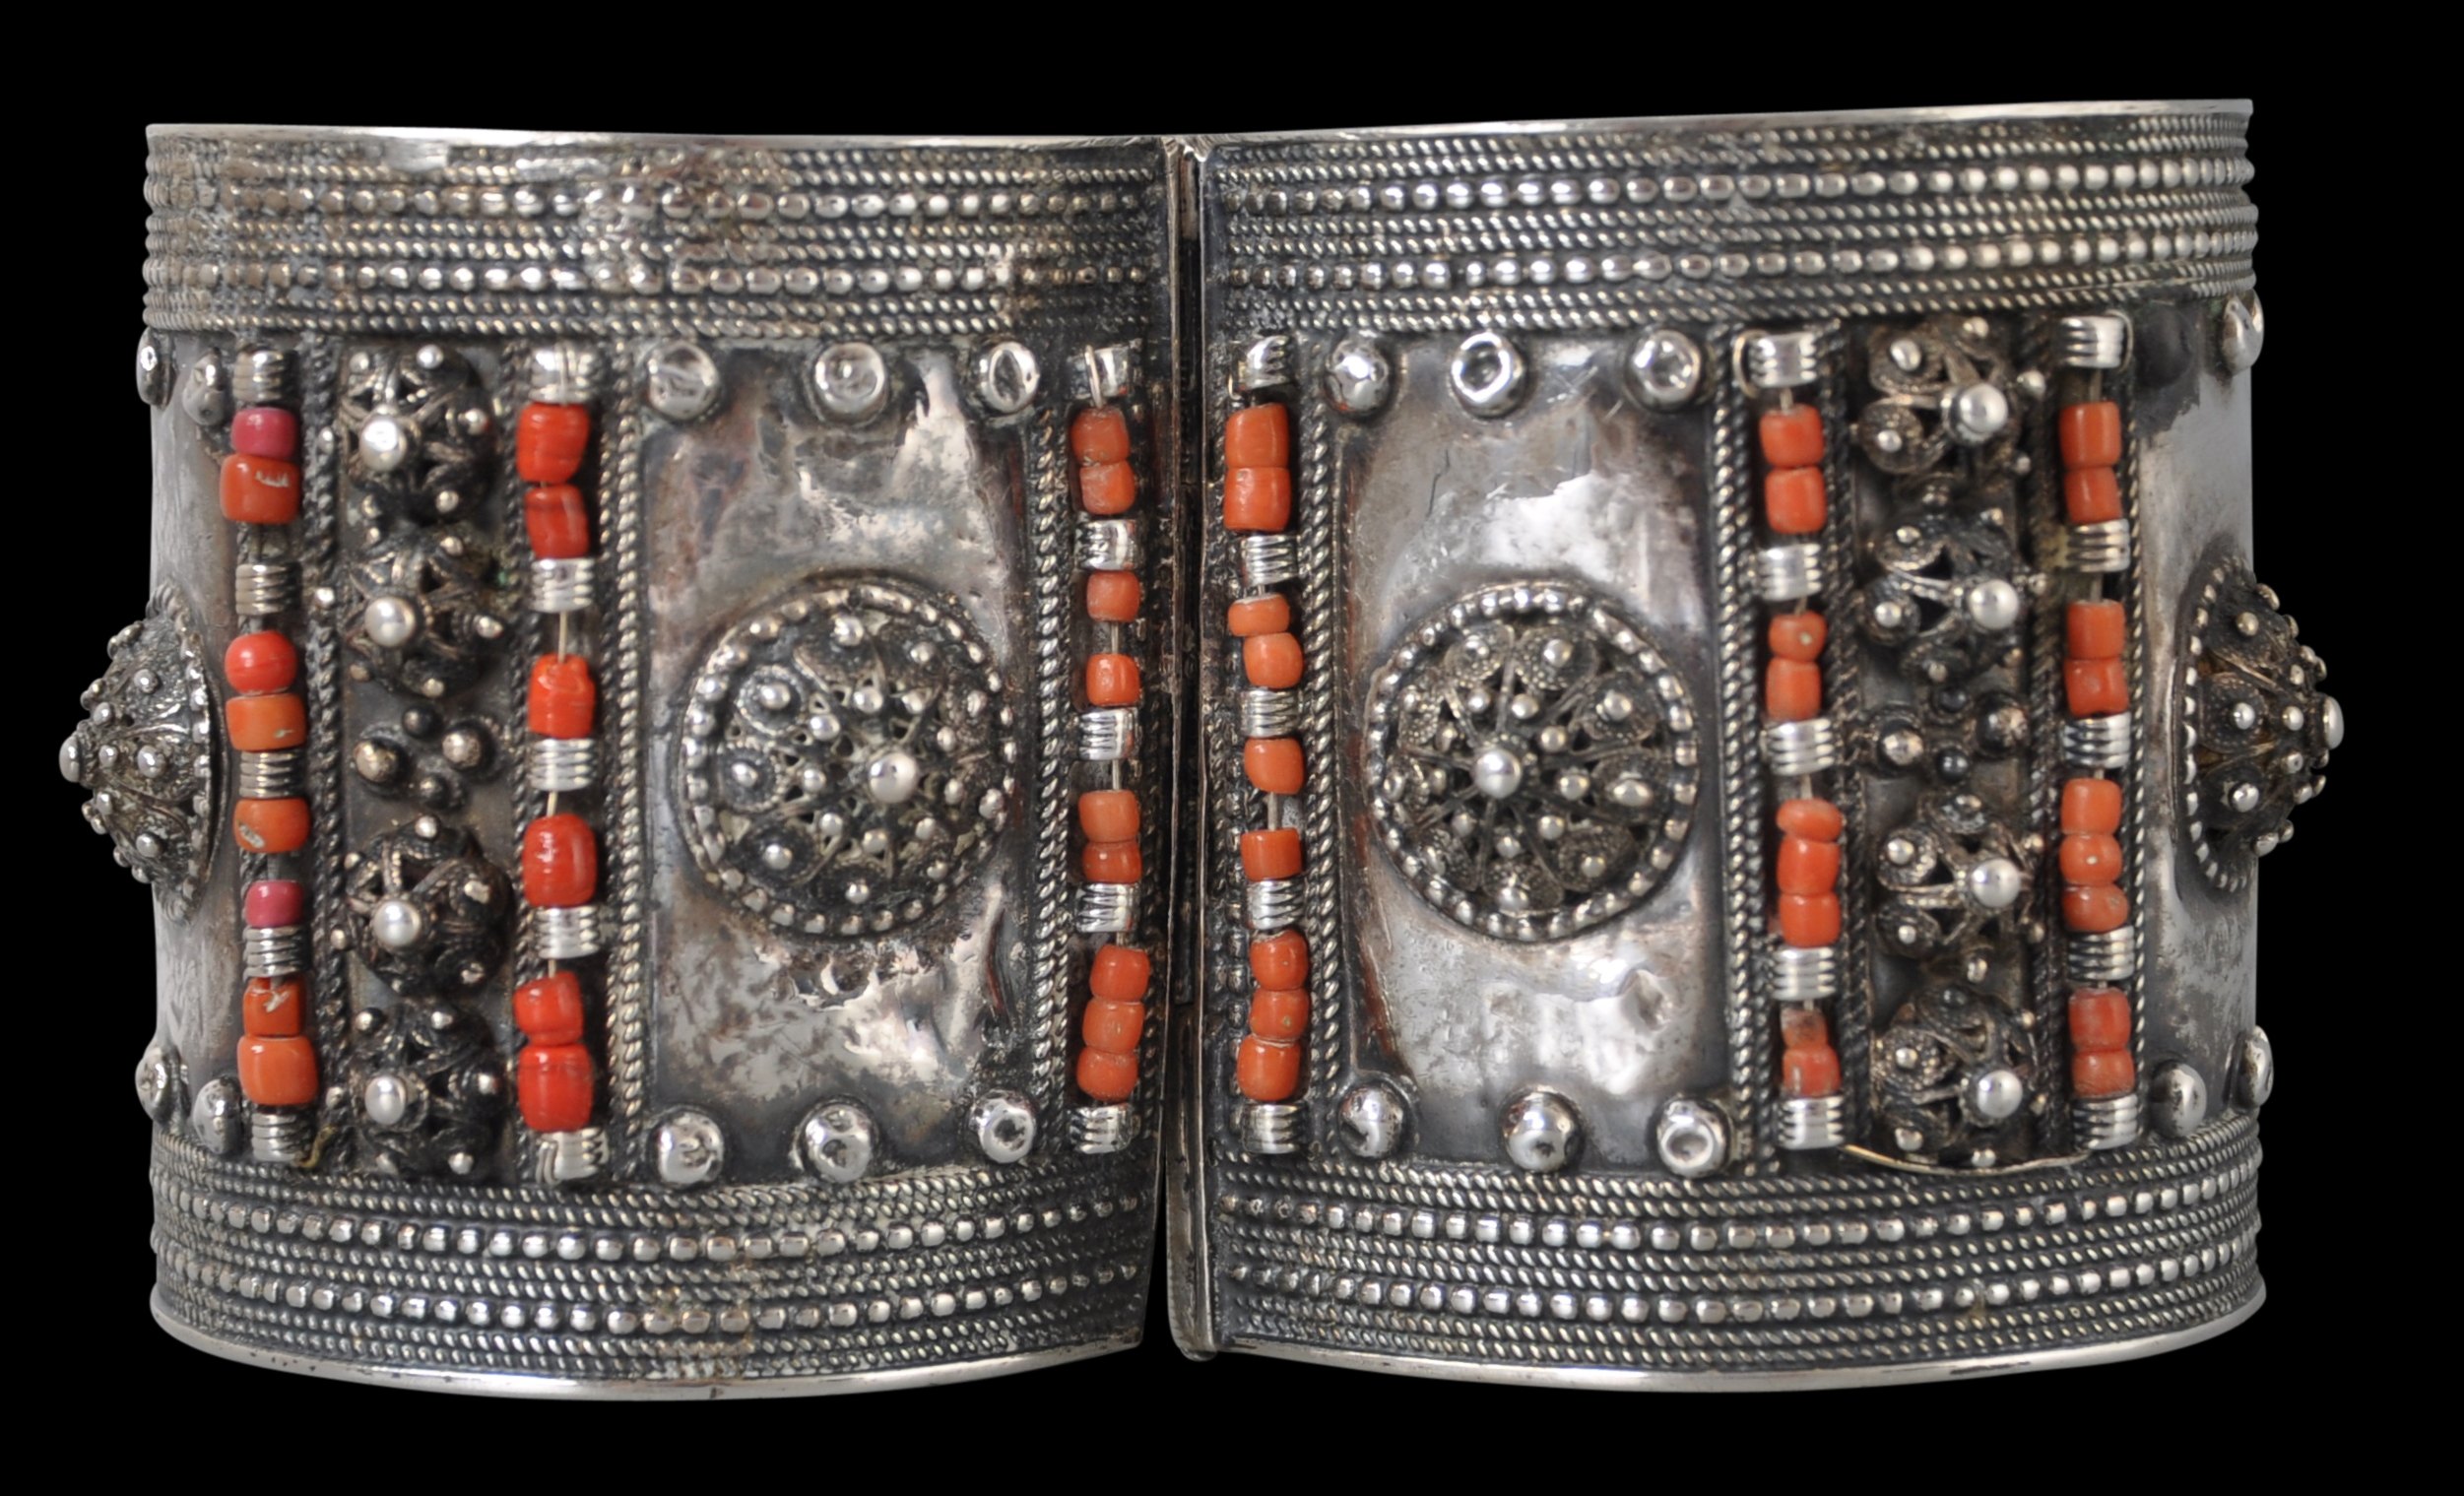 Ottoman Syrian Silver & Coral Cuff Bracelet - Michael Backman Ltd